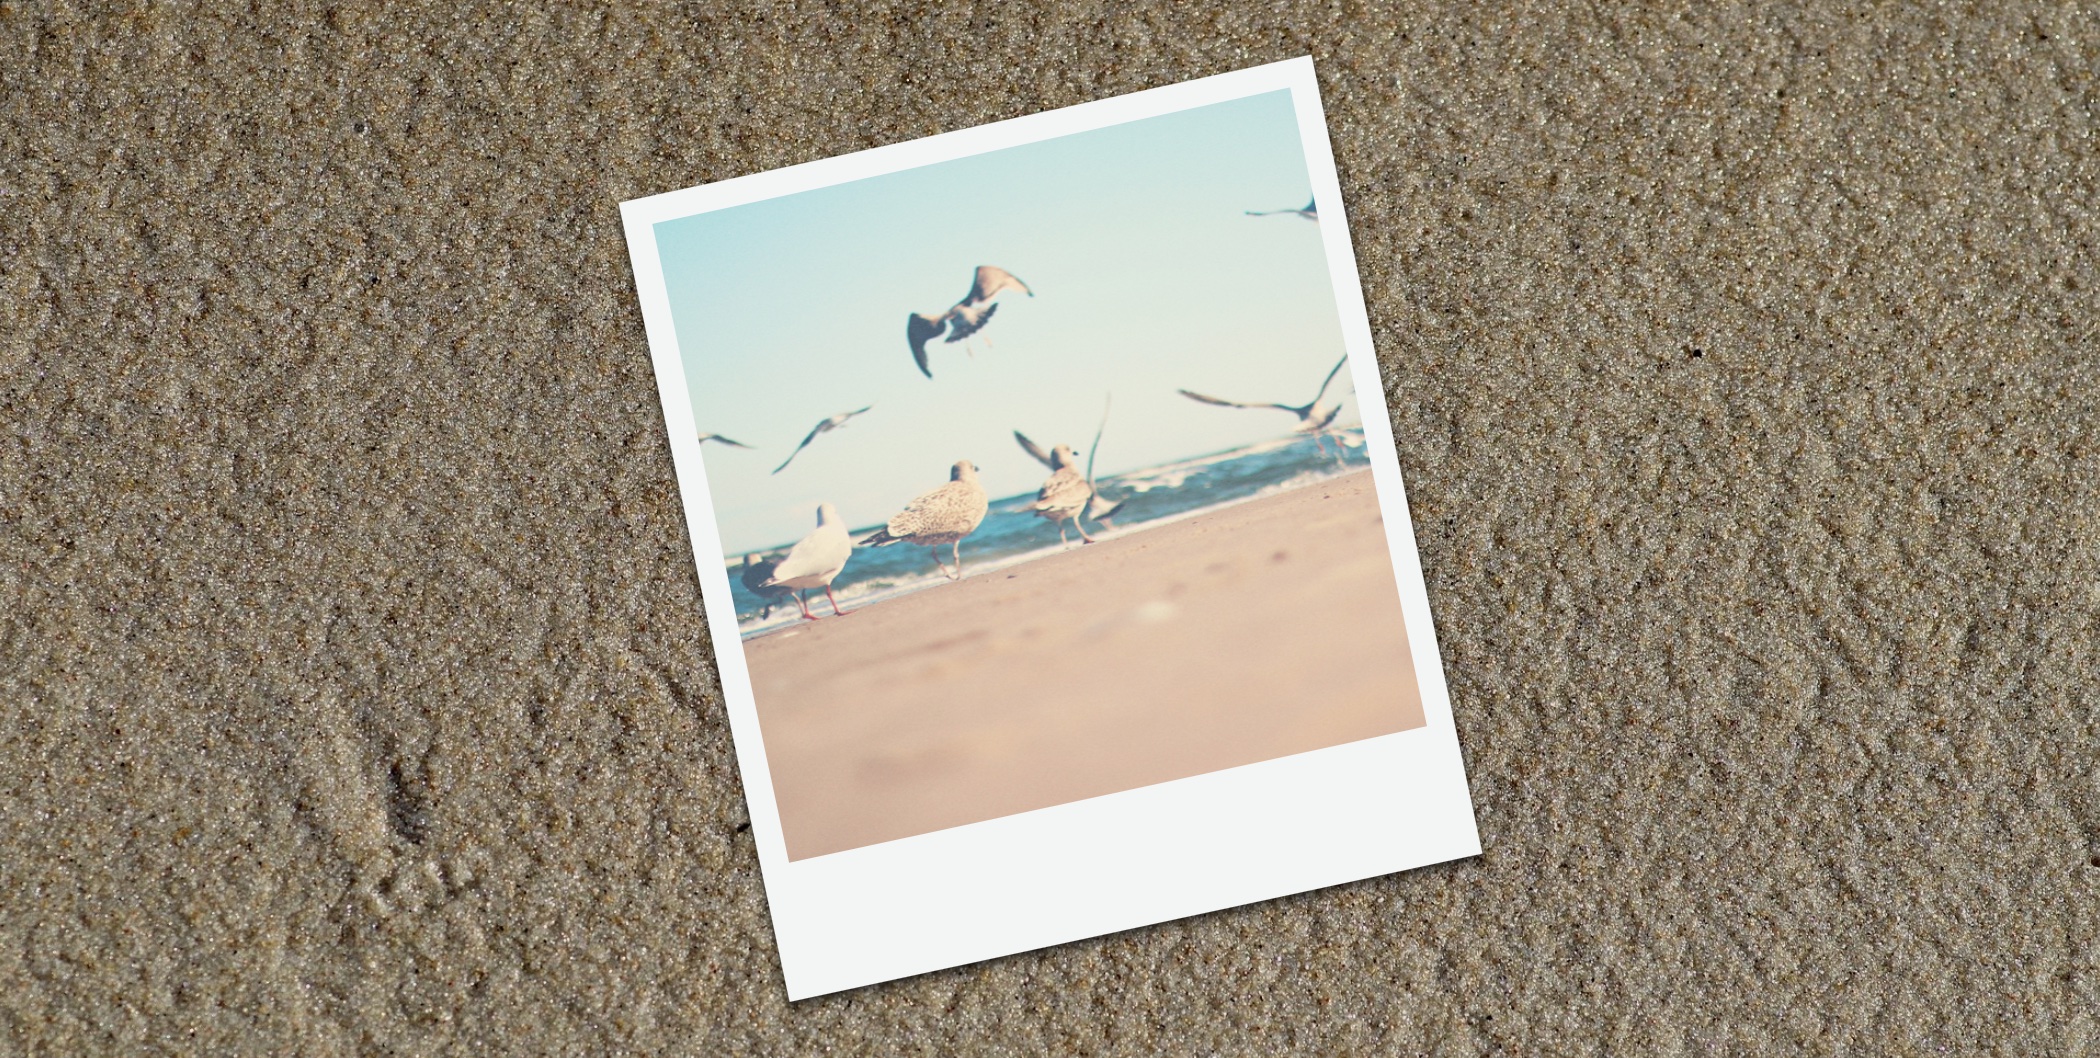 Old photo of seagulls on sand